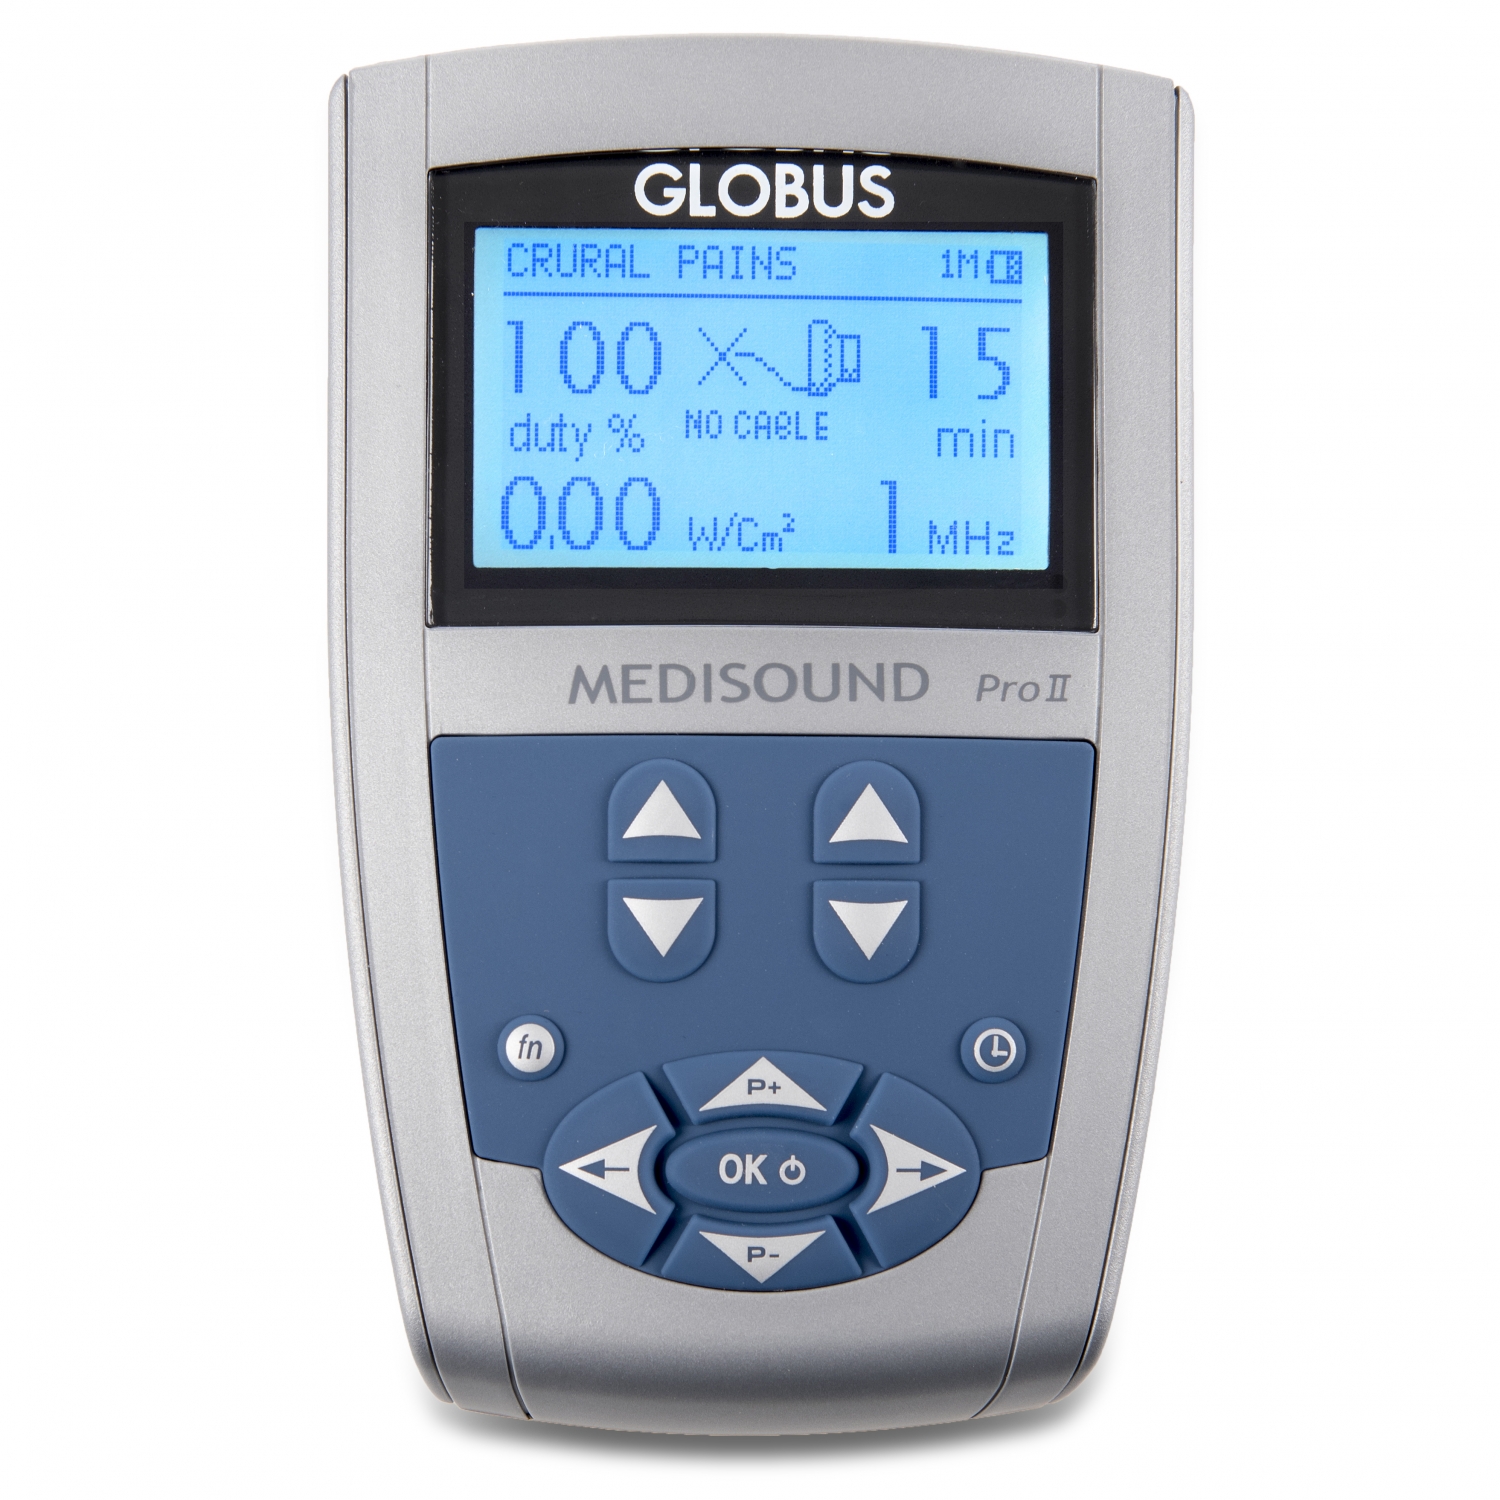 Globus Medisound Pro II